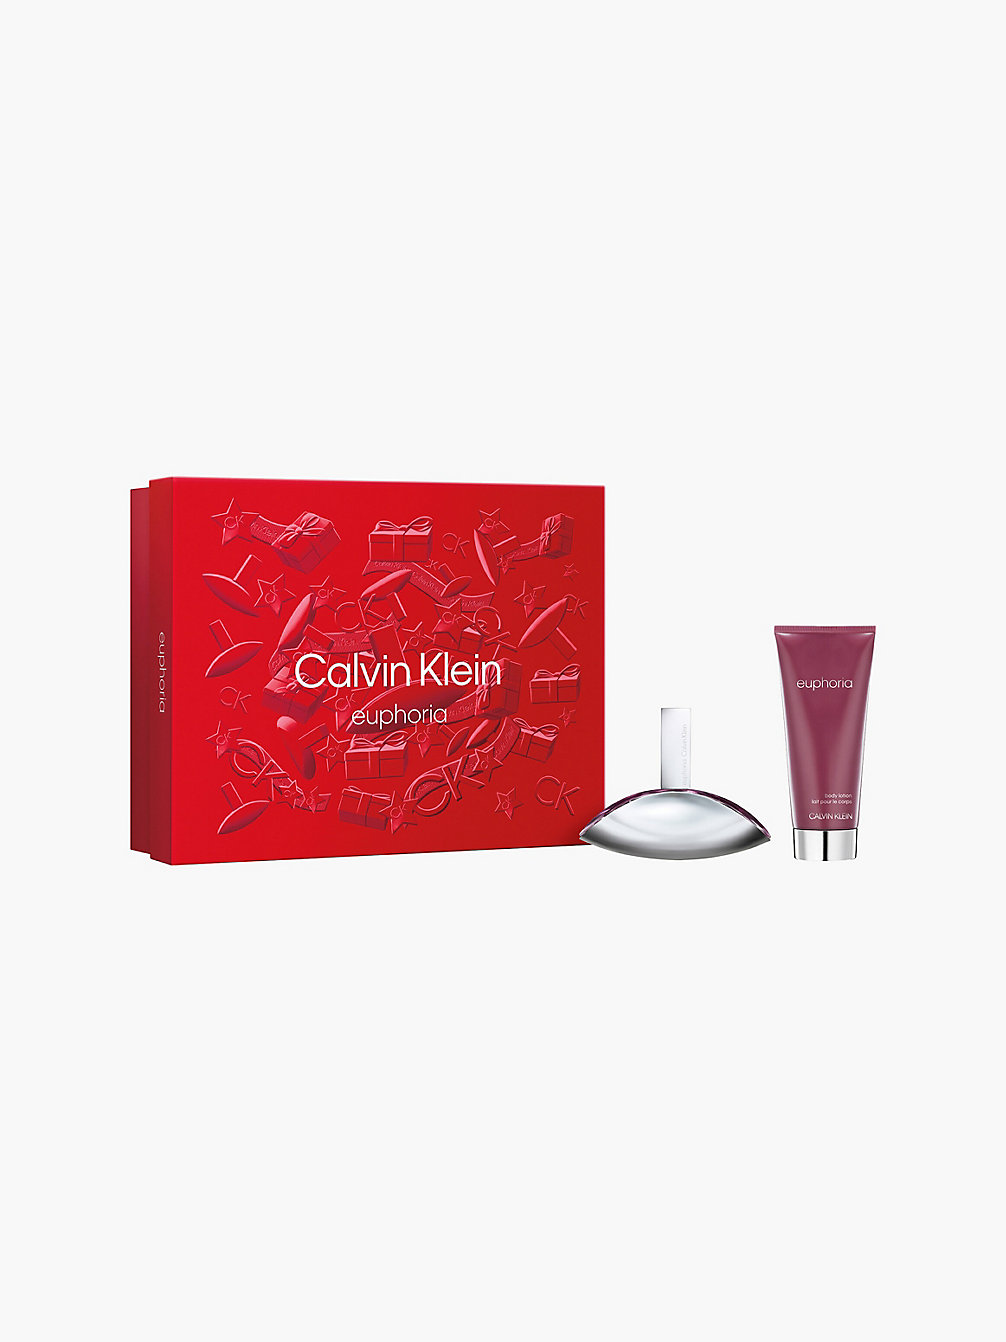 MULTI Euphoria For Women Eau De Parfum Gift Set undefined unisex Calvin Klein